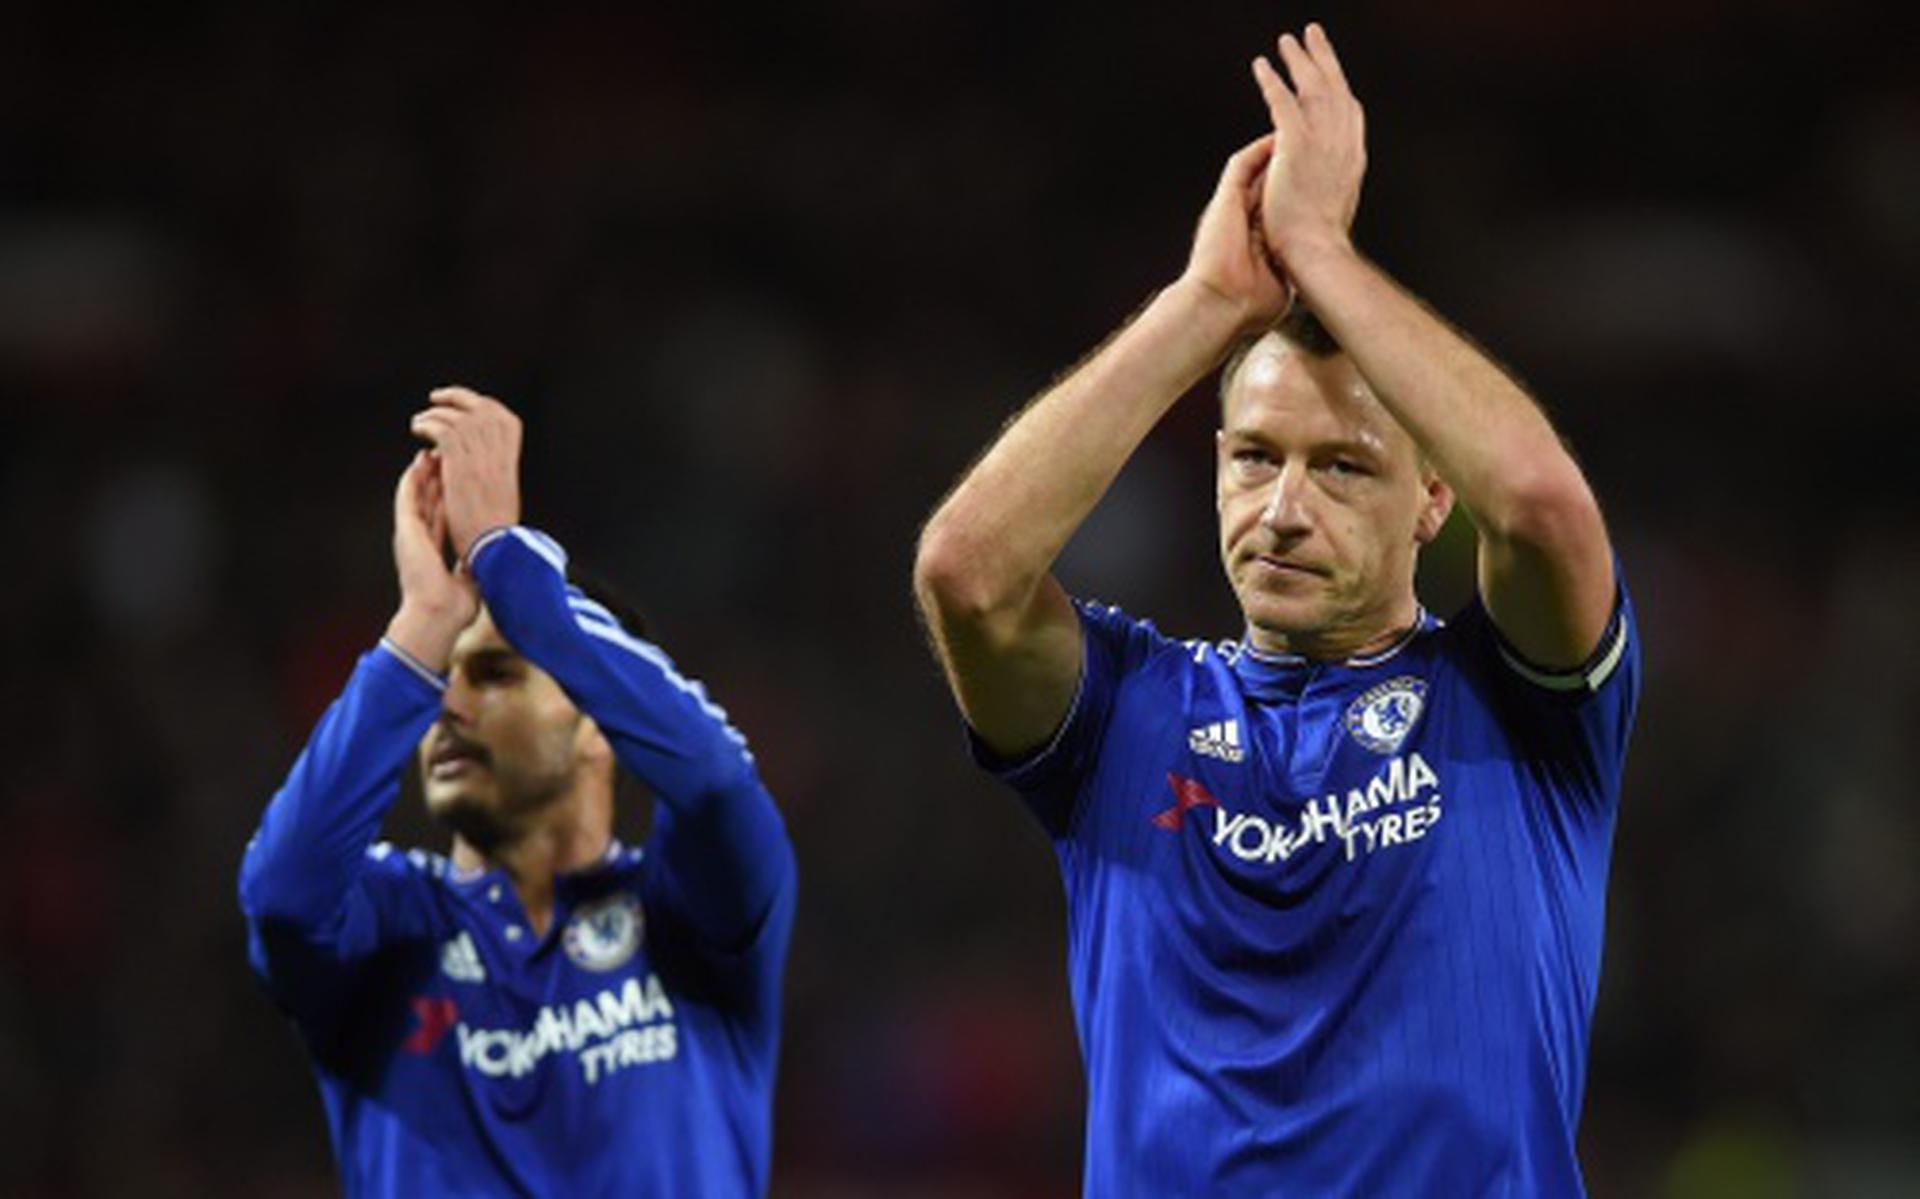 Terry verlaat Chelsea komende zomer